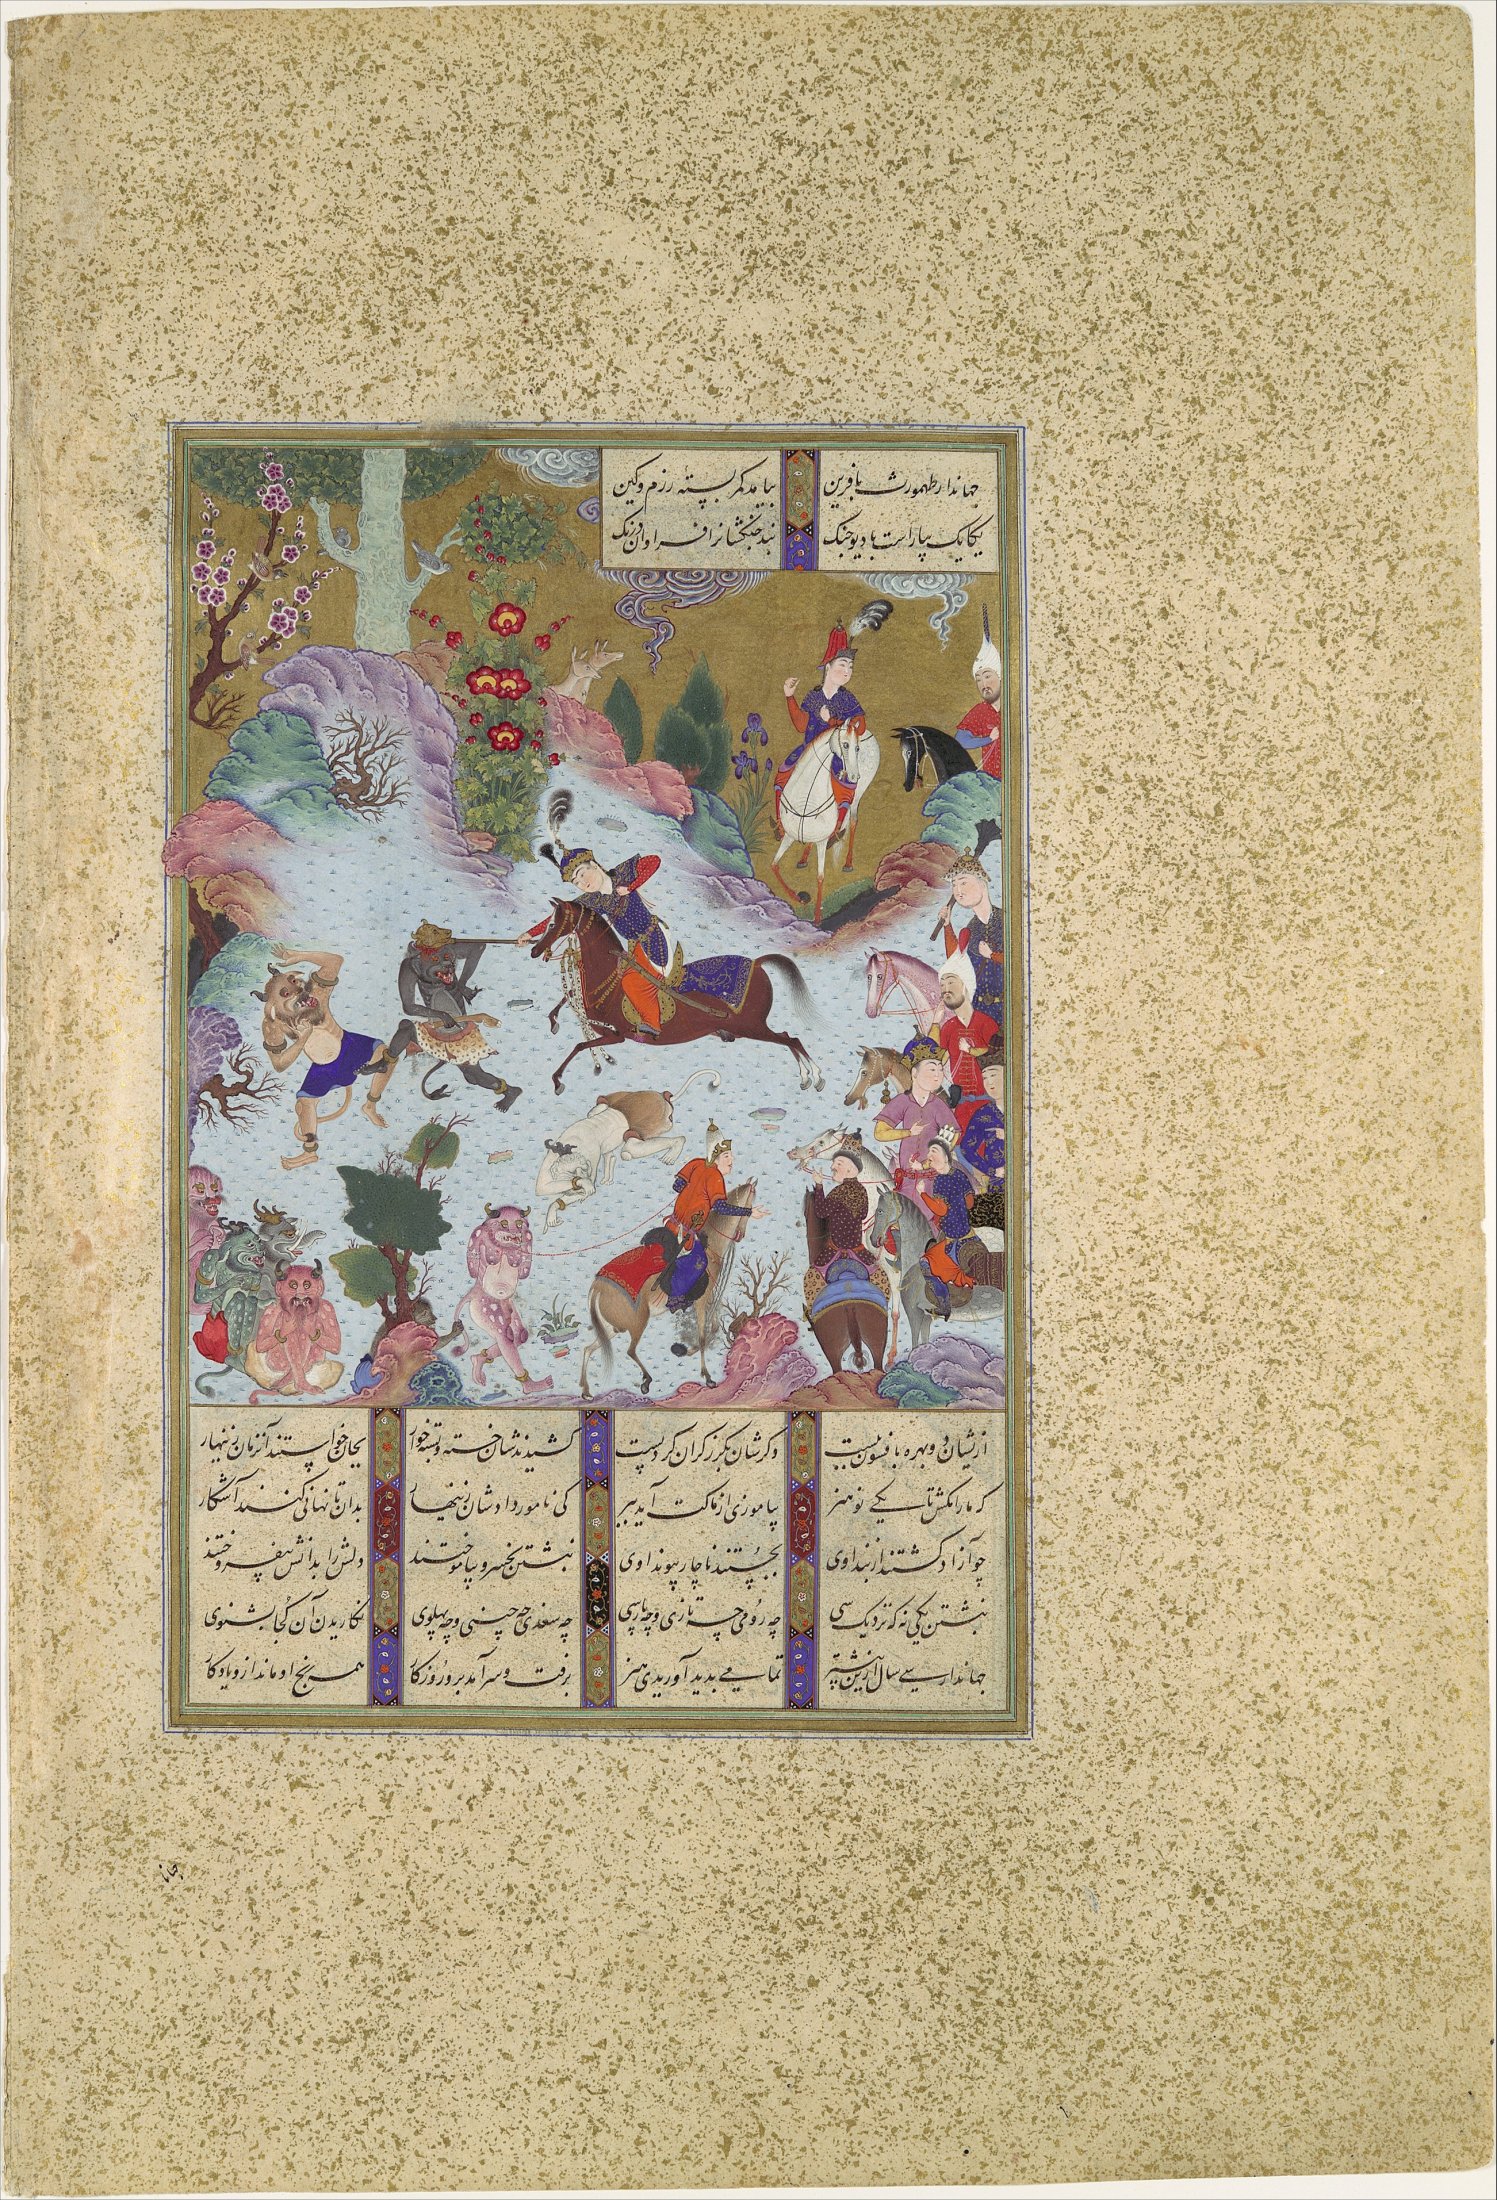  Tahmuras Defeats The Divs , Folio 23v From The Shahnama (Book Of Kings) Of Shah Tahmasp MET DP107119